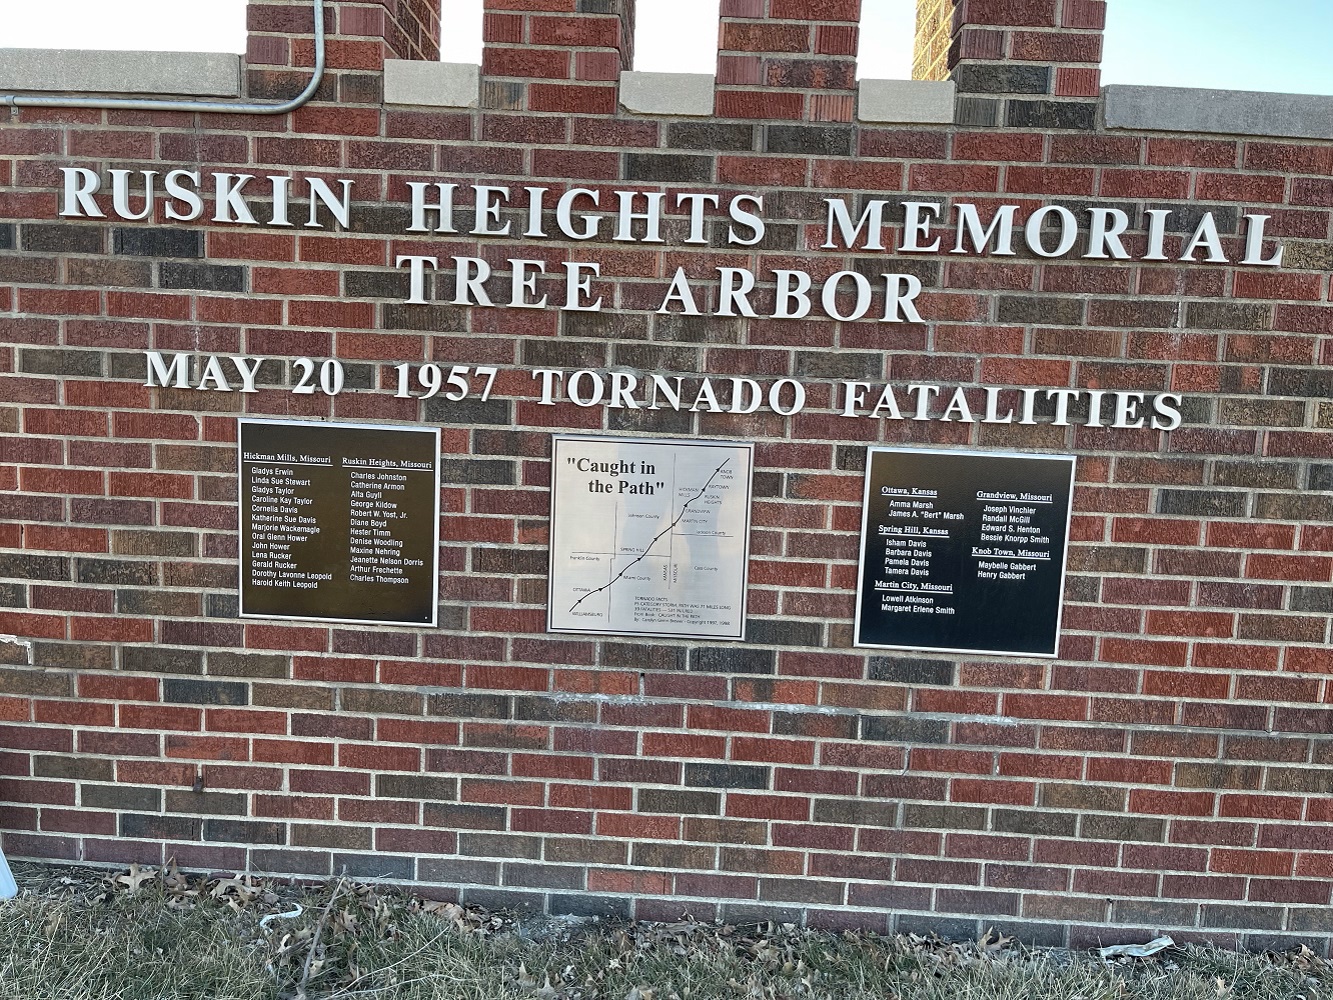 Ruskin Heights Memorial - Tree Arbor